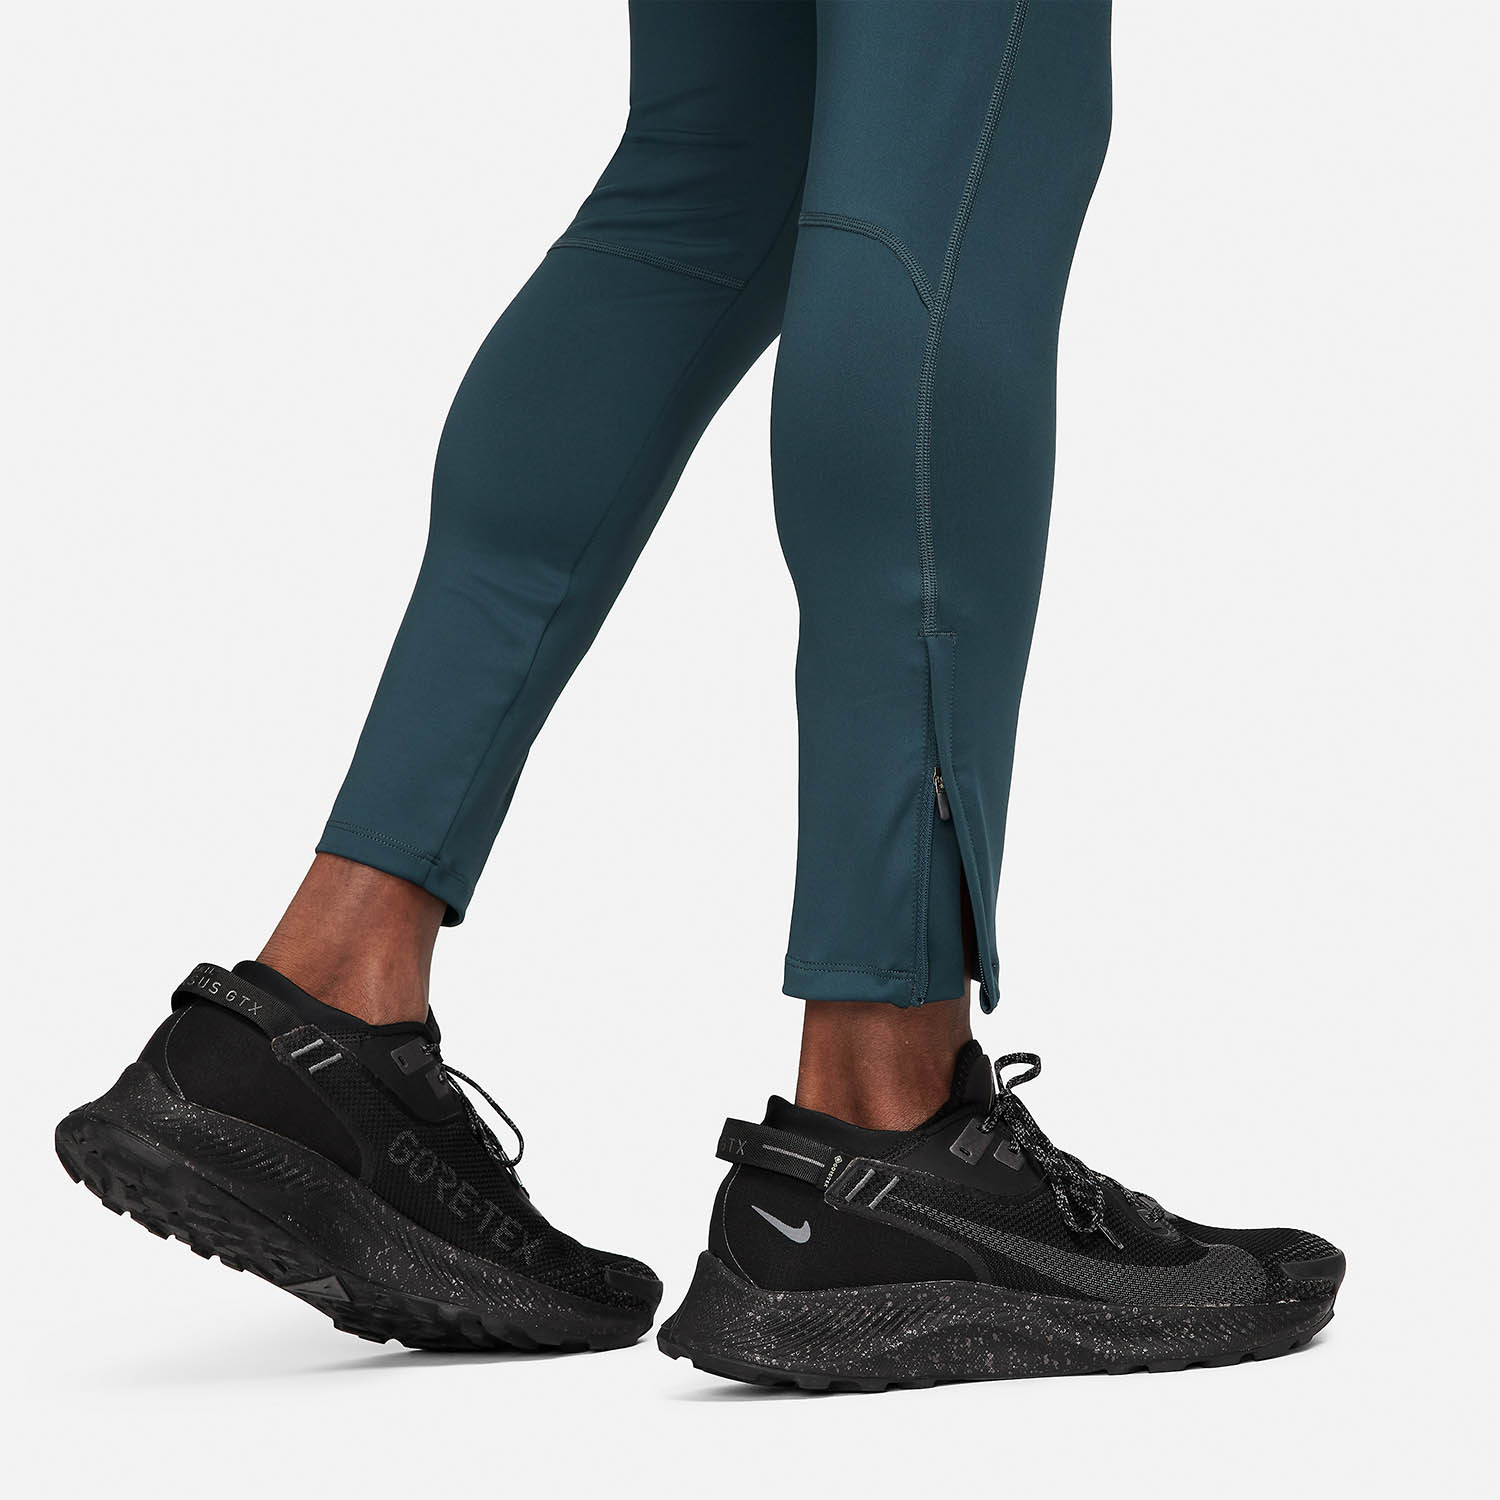 Nike Performance LUNAR RAY WINTER - Leggings - black/white/black -  Zalando.de